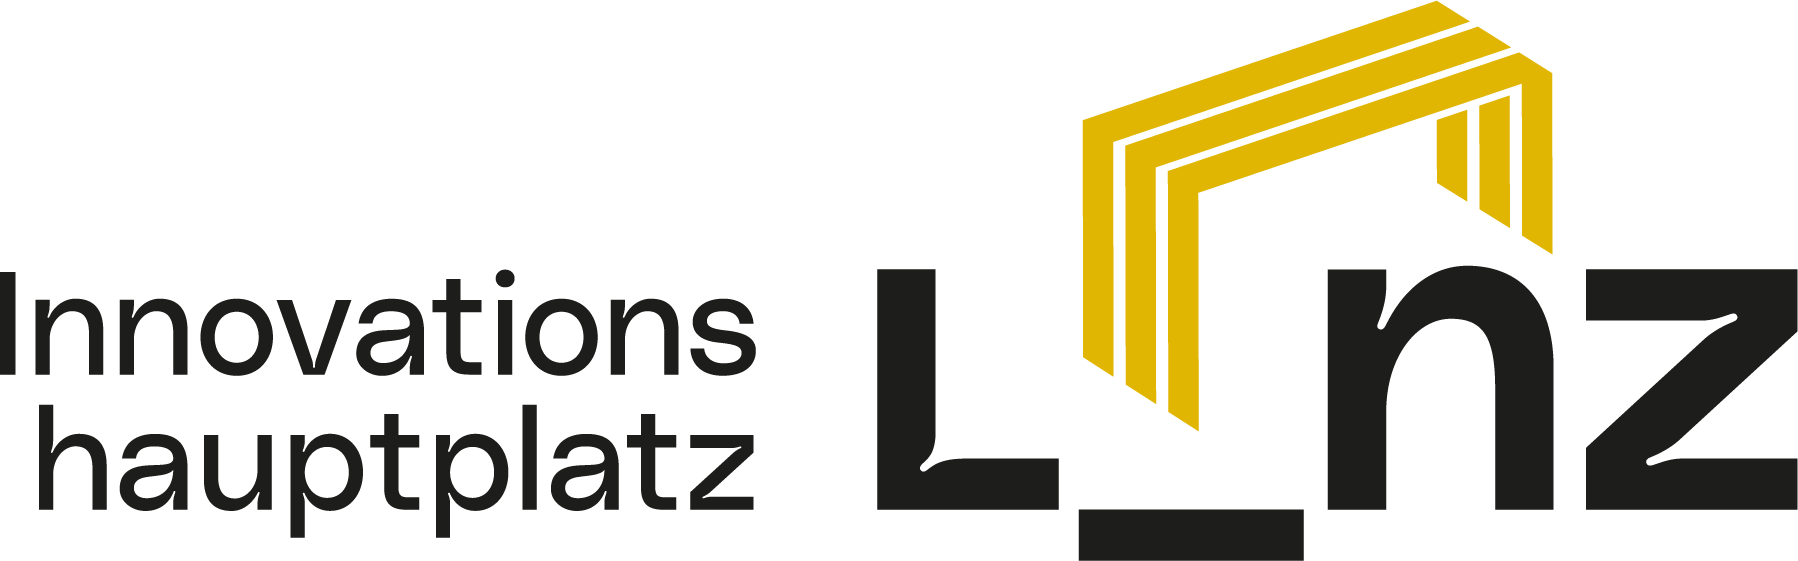 Innovationshauptplatz of the City of Linz